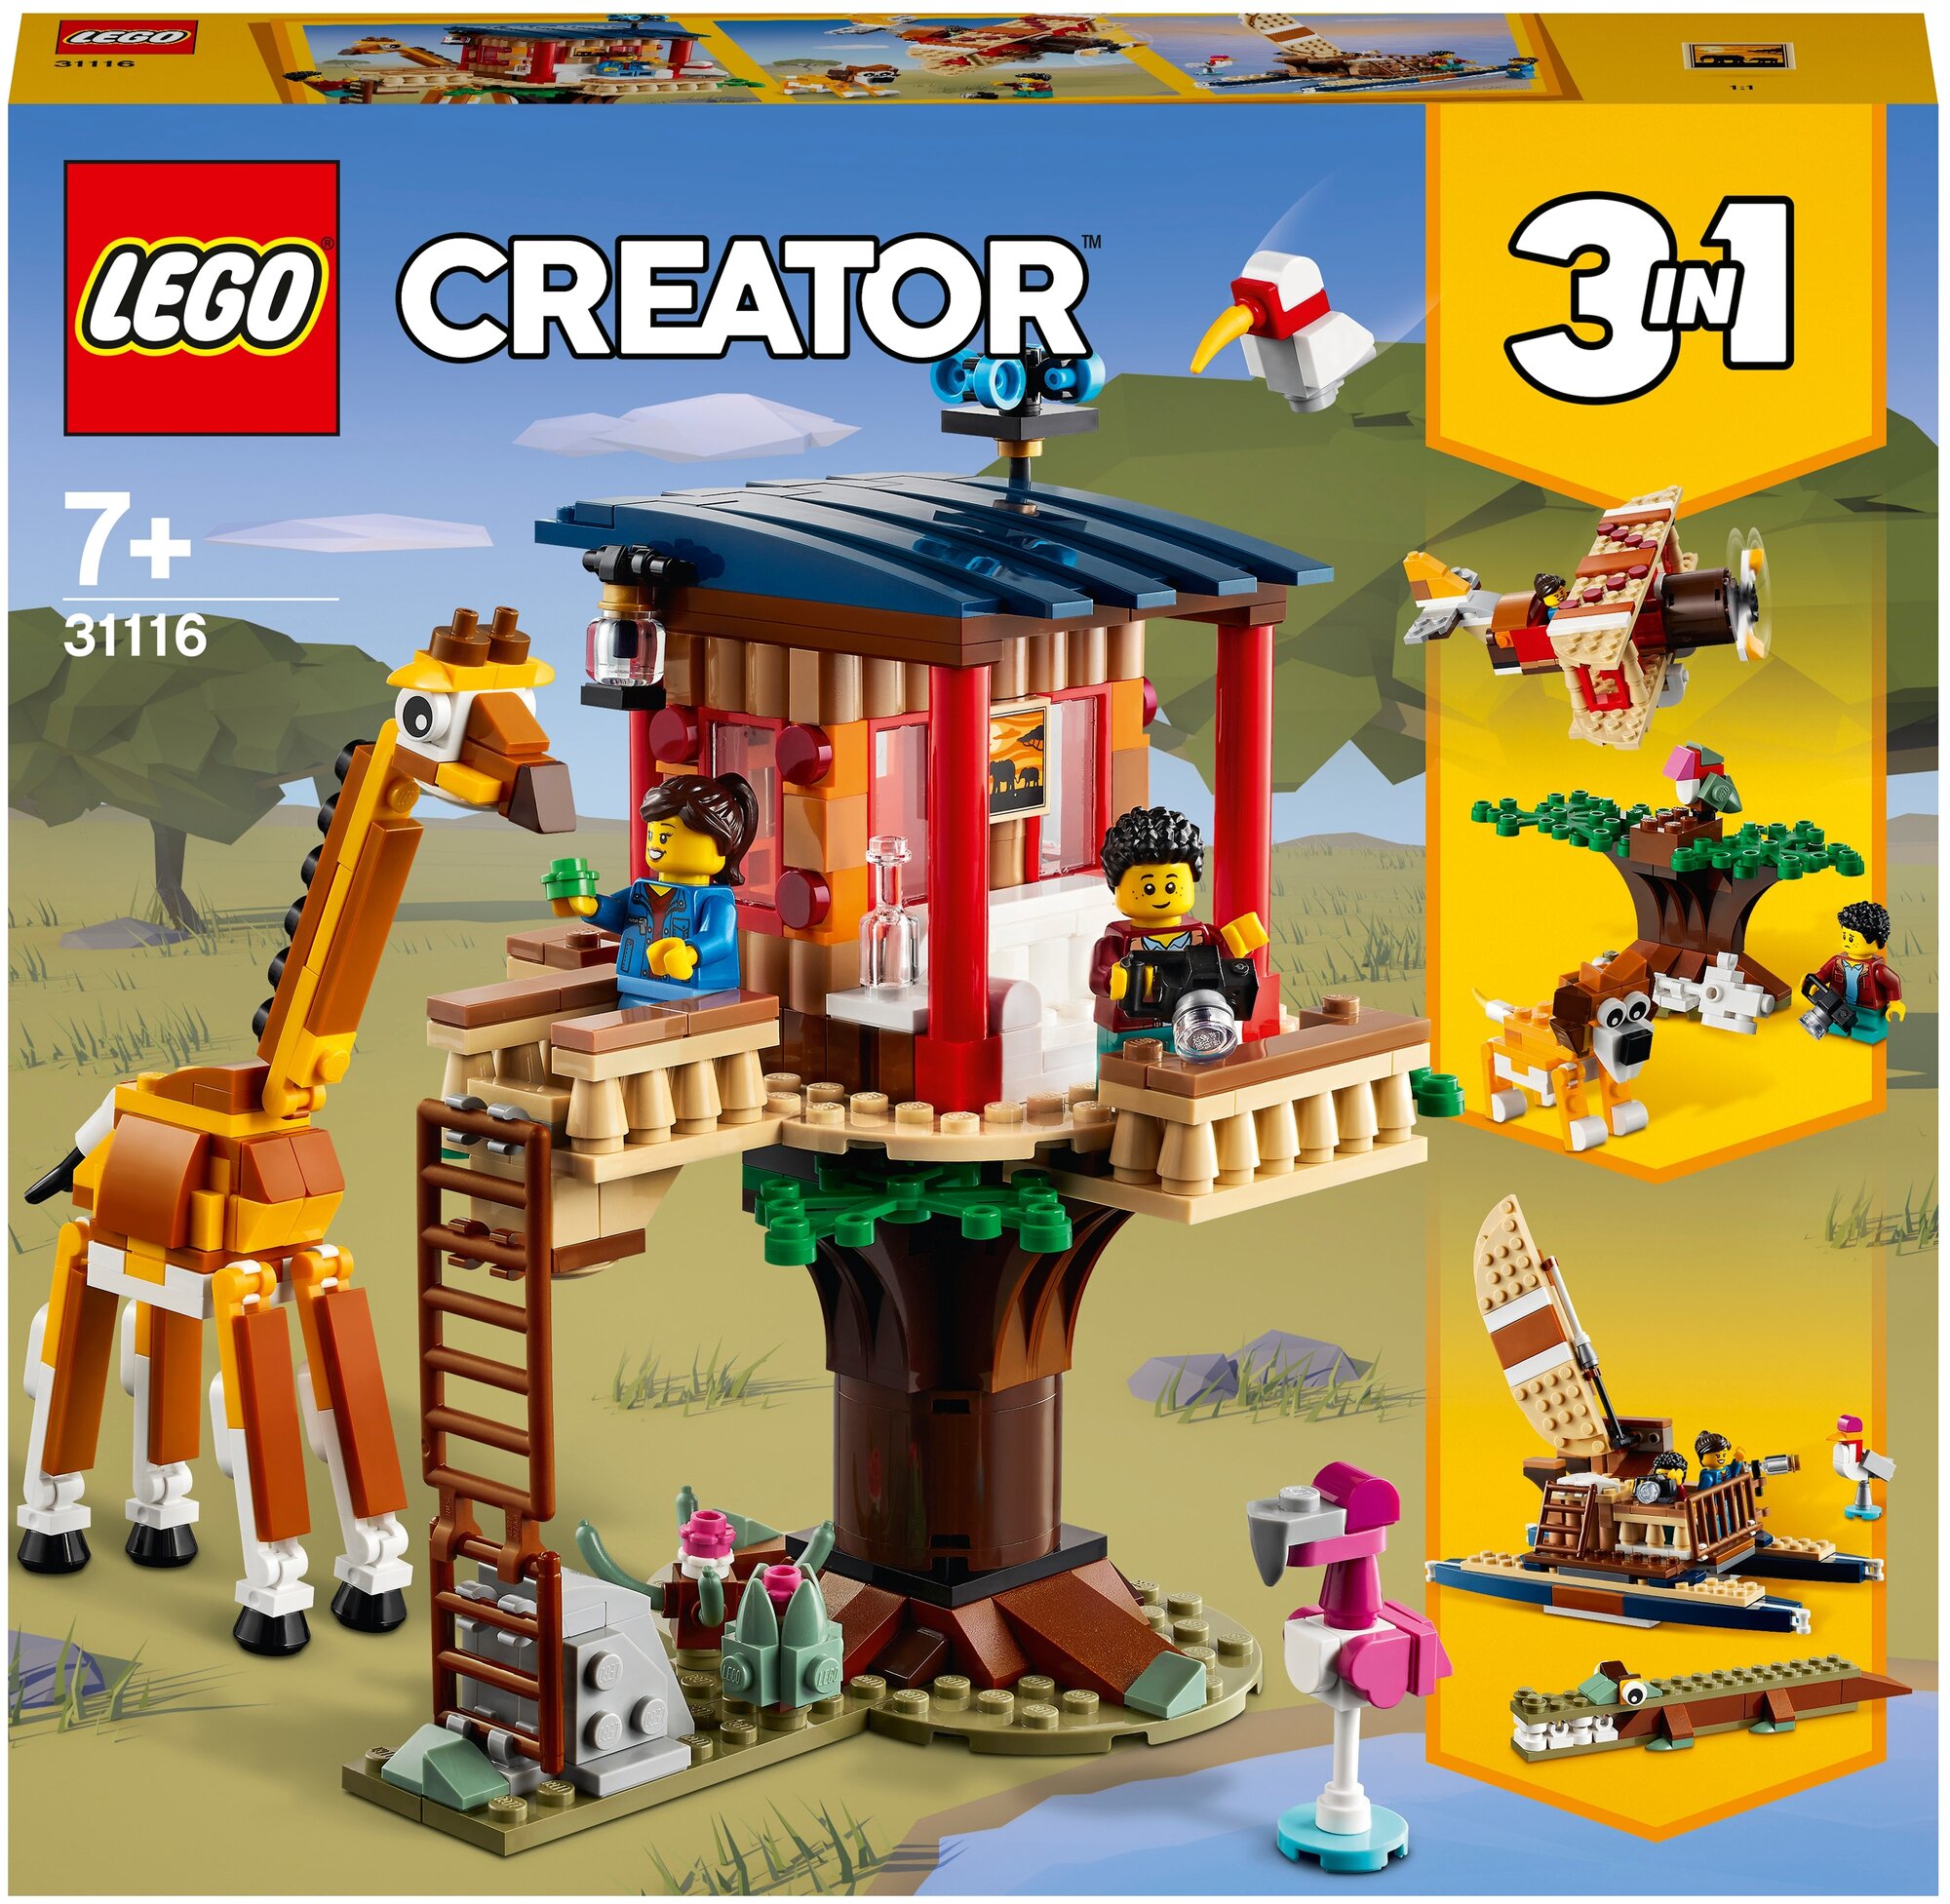 Конструктор LEGO Creator 31116 "Домик на дереве для сафари", 397 деталей Unknown - фото №1